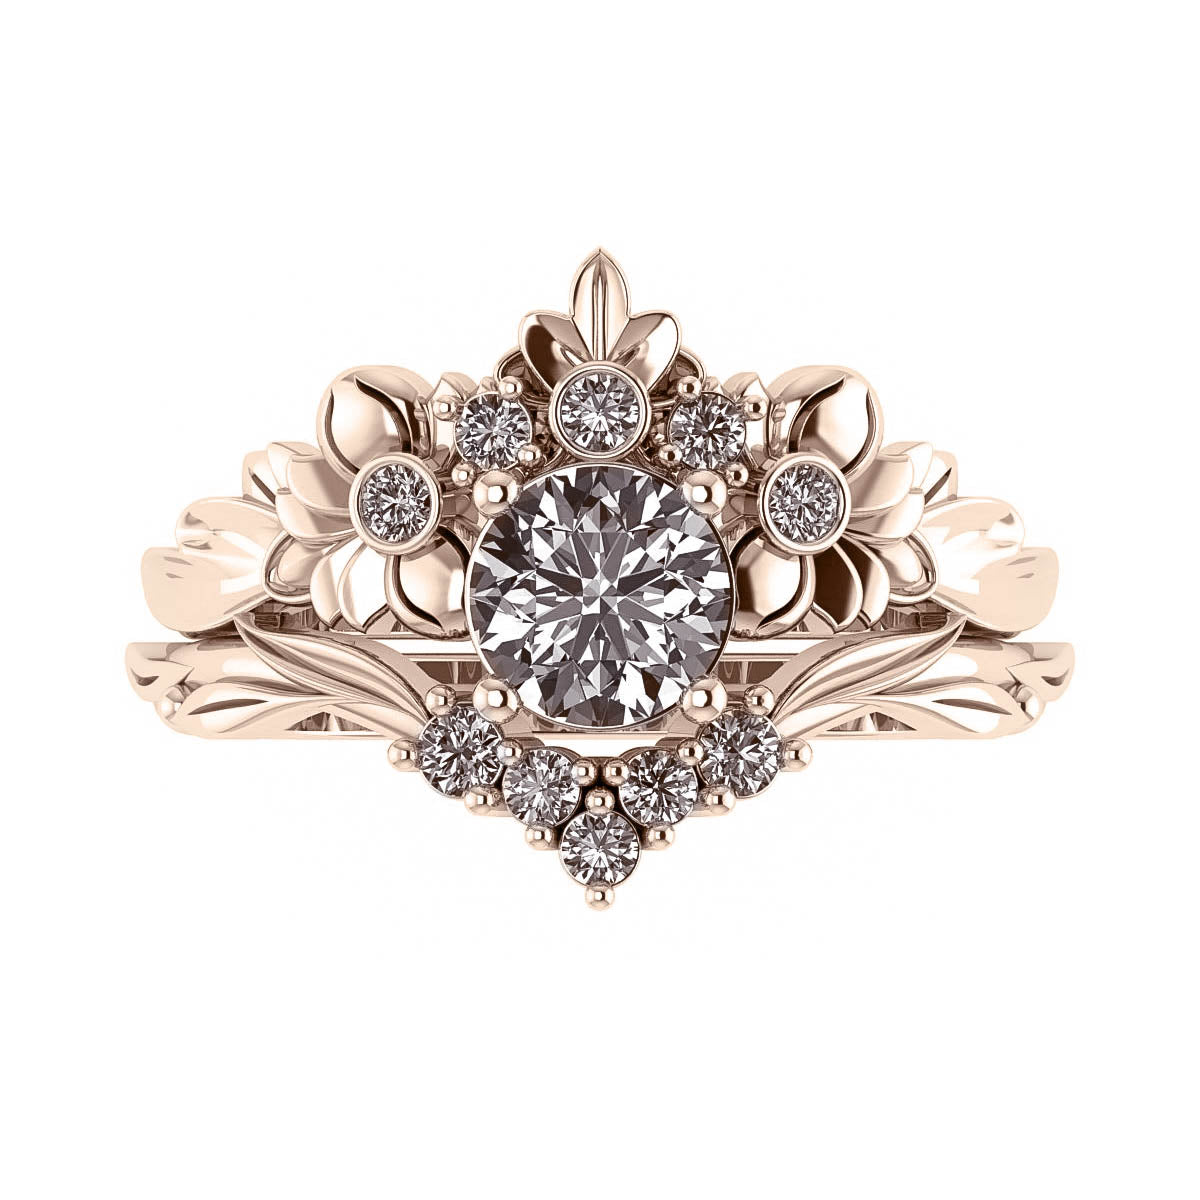 Forget Me Not | custom bridal ring set with round cut gemstone 6 mm - Eden Garden Jewelry™